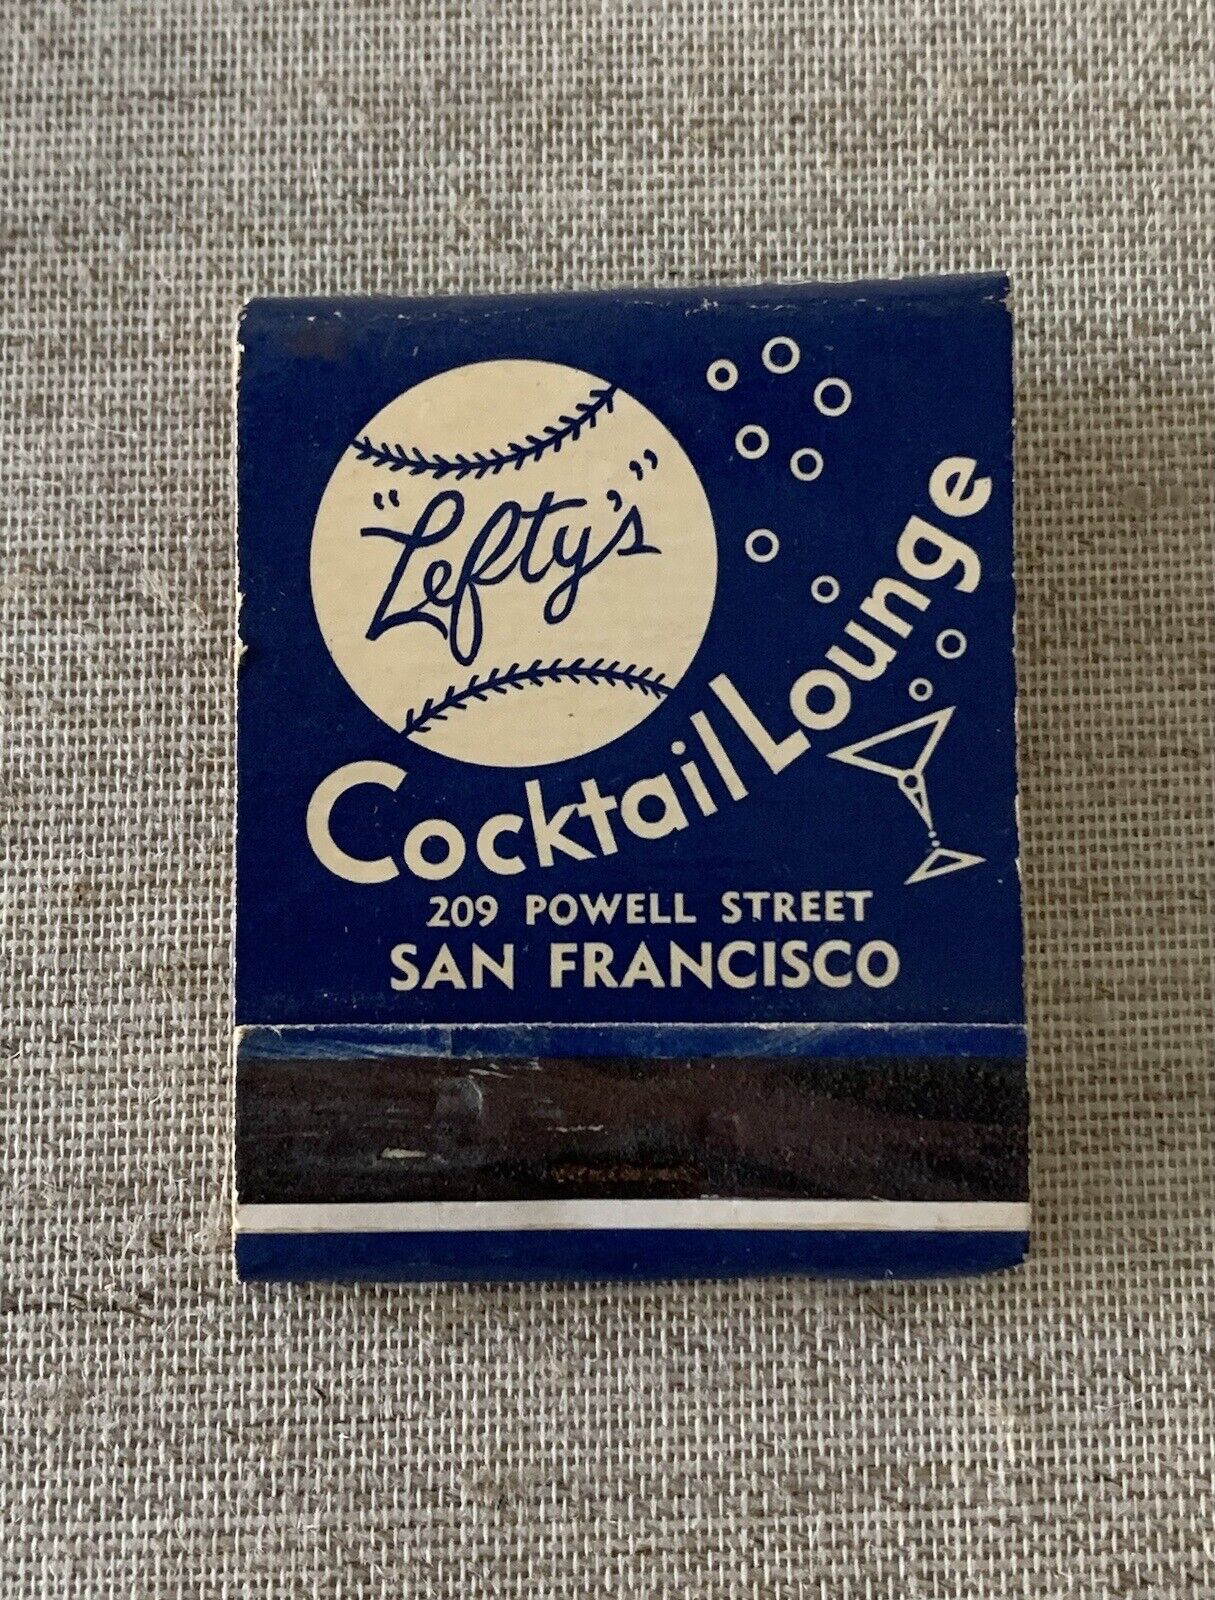 LEFTY’S Powell Street San Francisco Cocktail Lounge Historic Vintage Matchbook